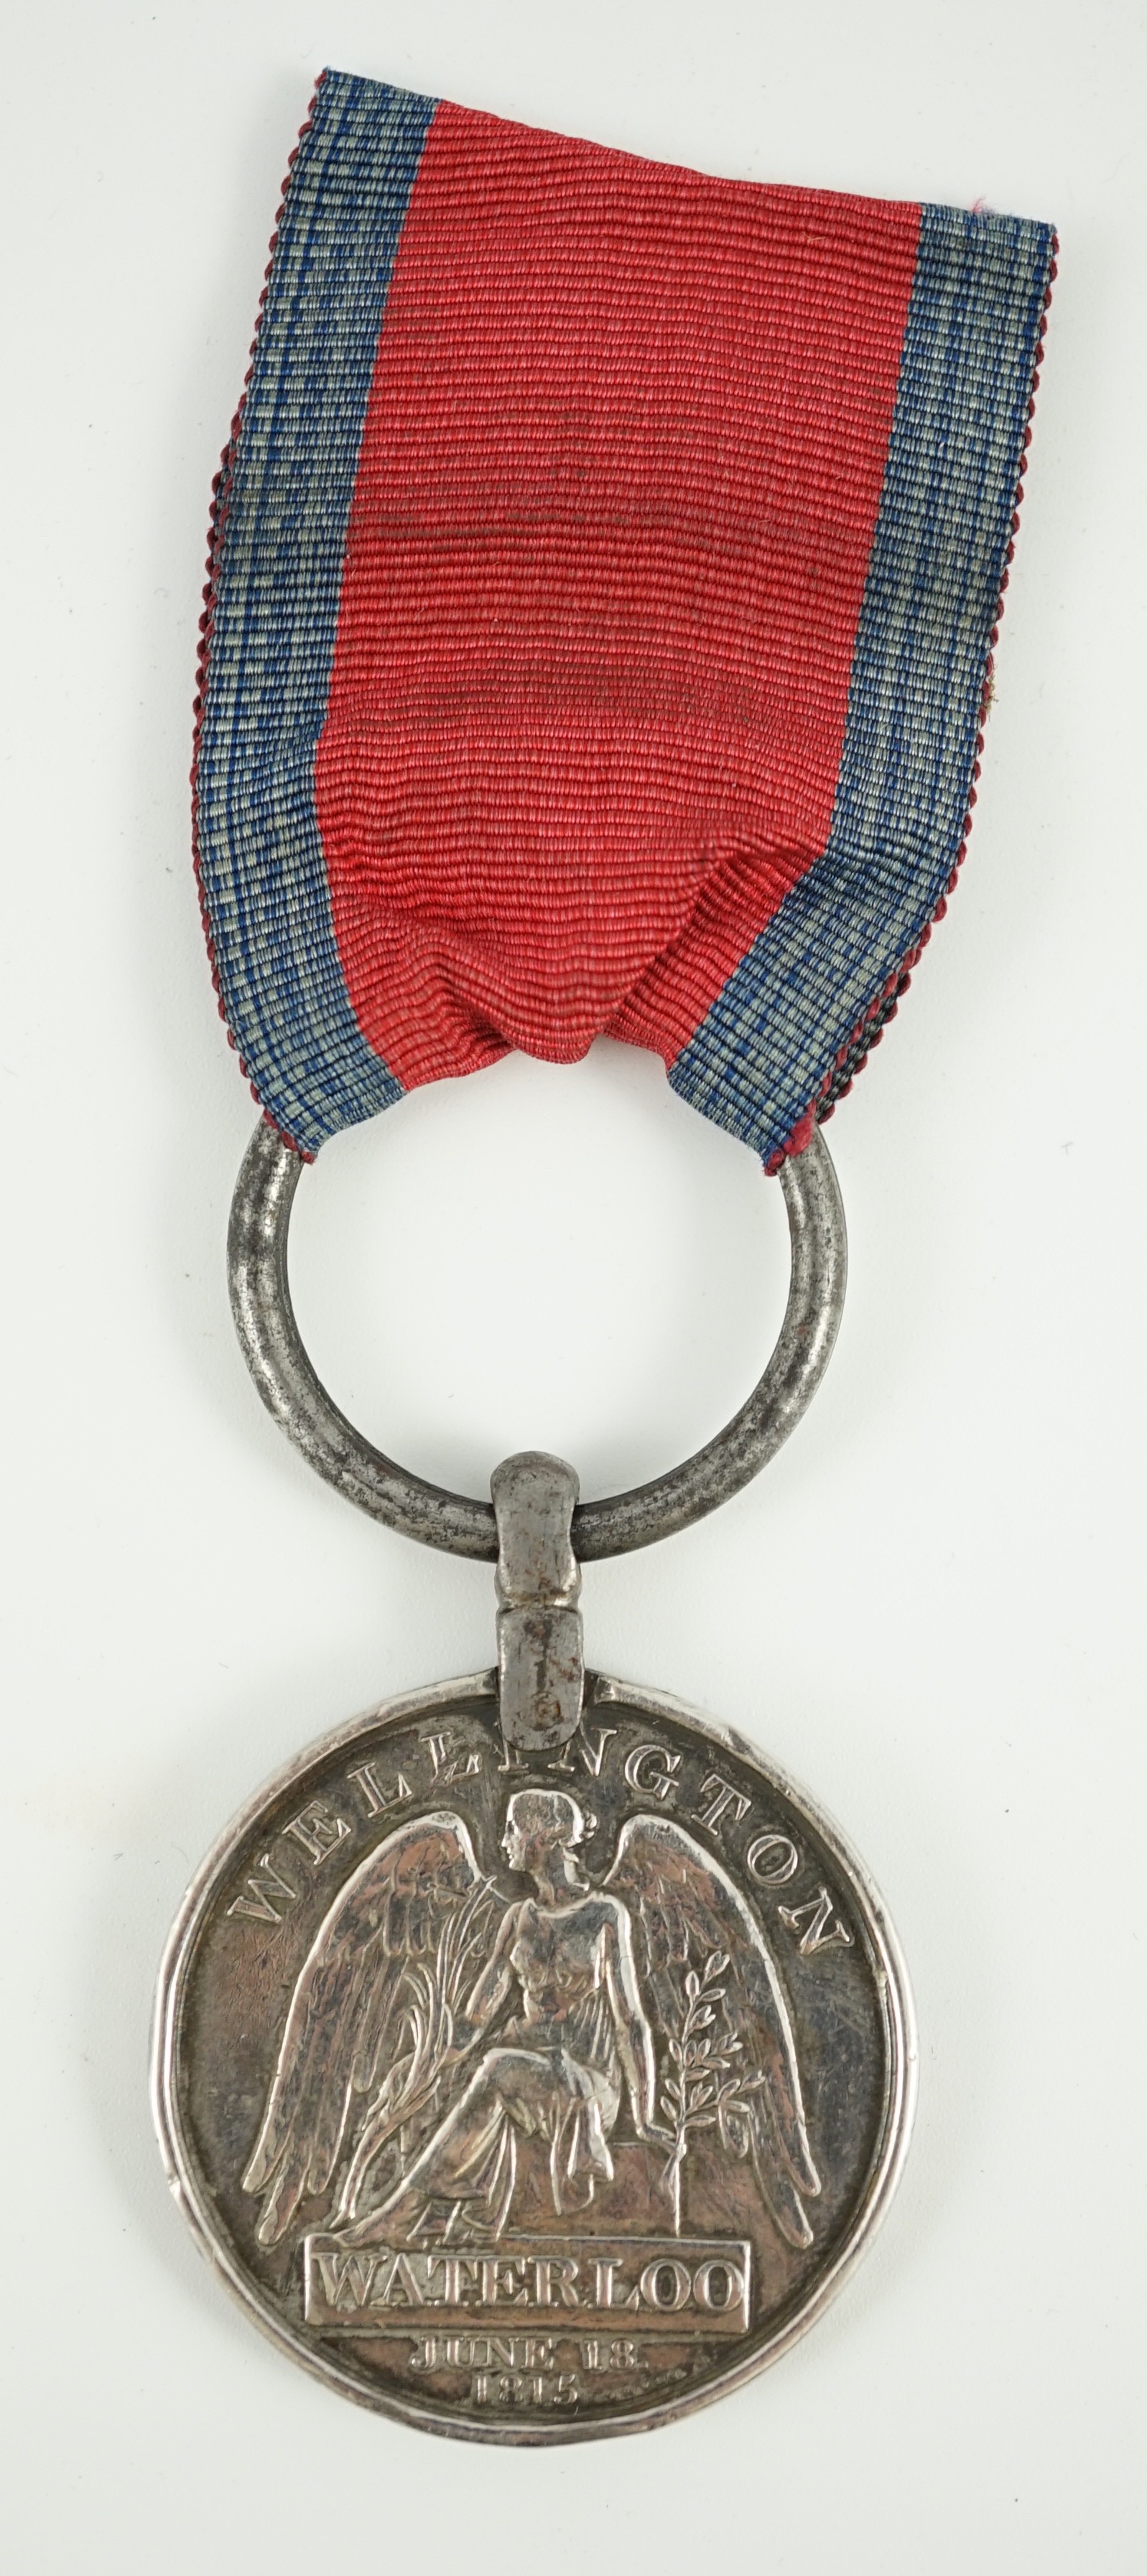 British campaign medals, Waterloo medal impressed Henry Weber 2nd Batt. 59th Reg. Foot